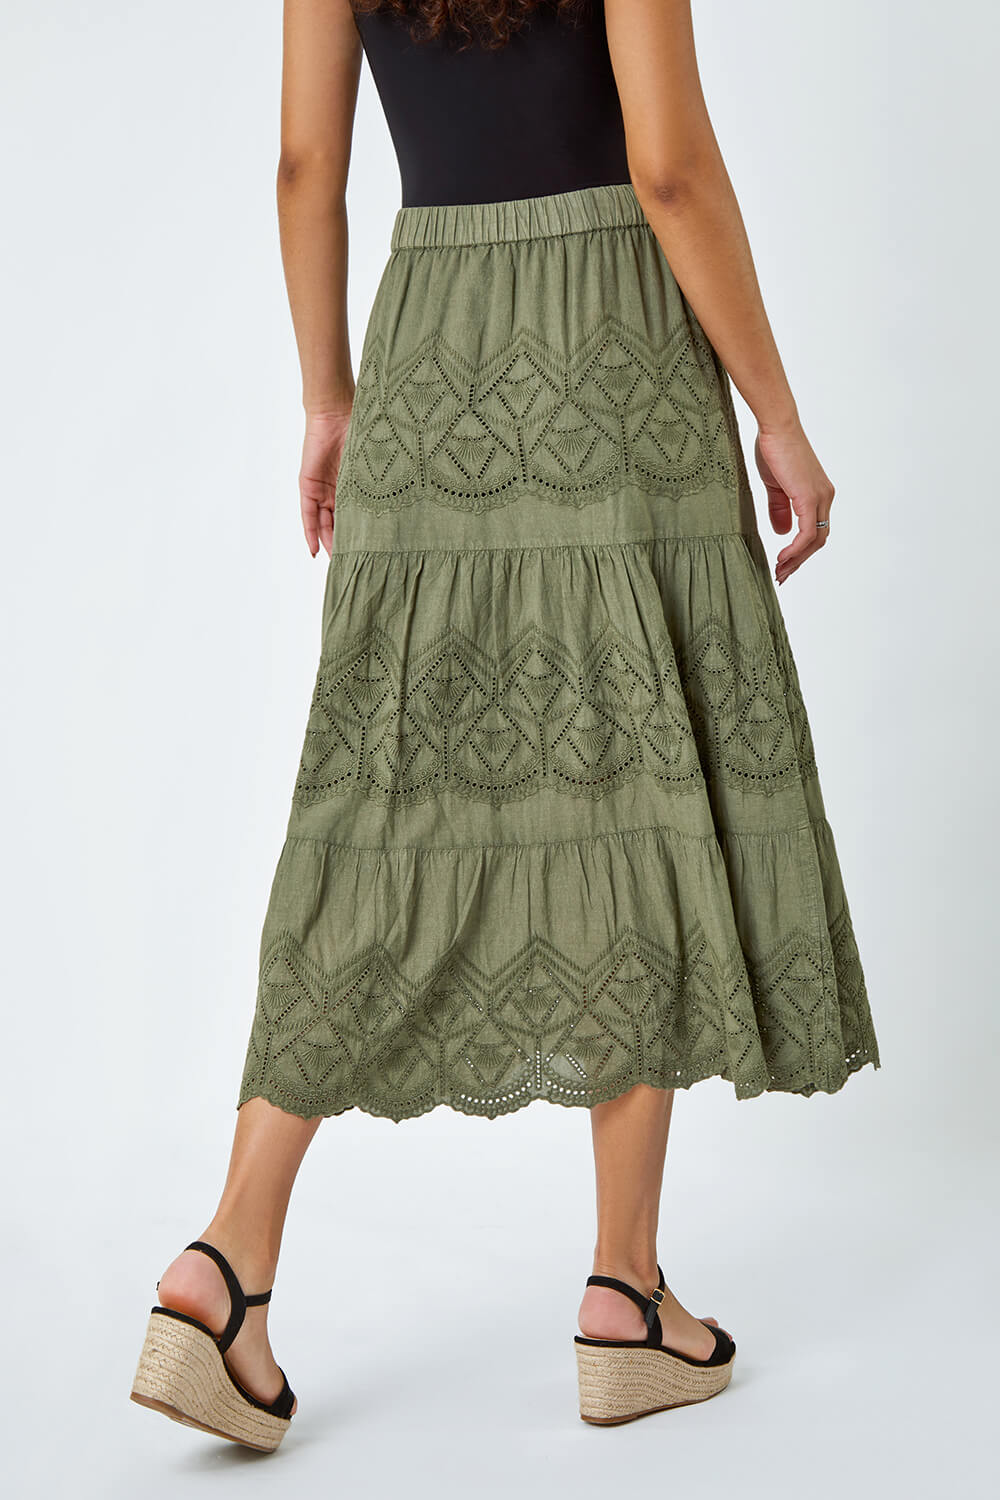 KHAKI Broderie Elastic Waist A Line Tiered Midi Skirt, Image 3 of 5